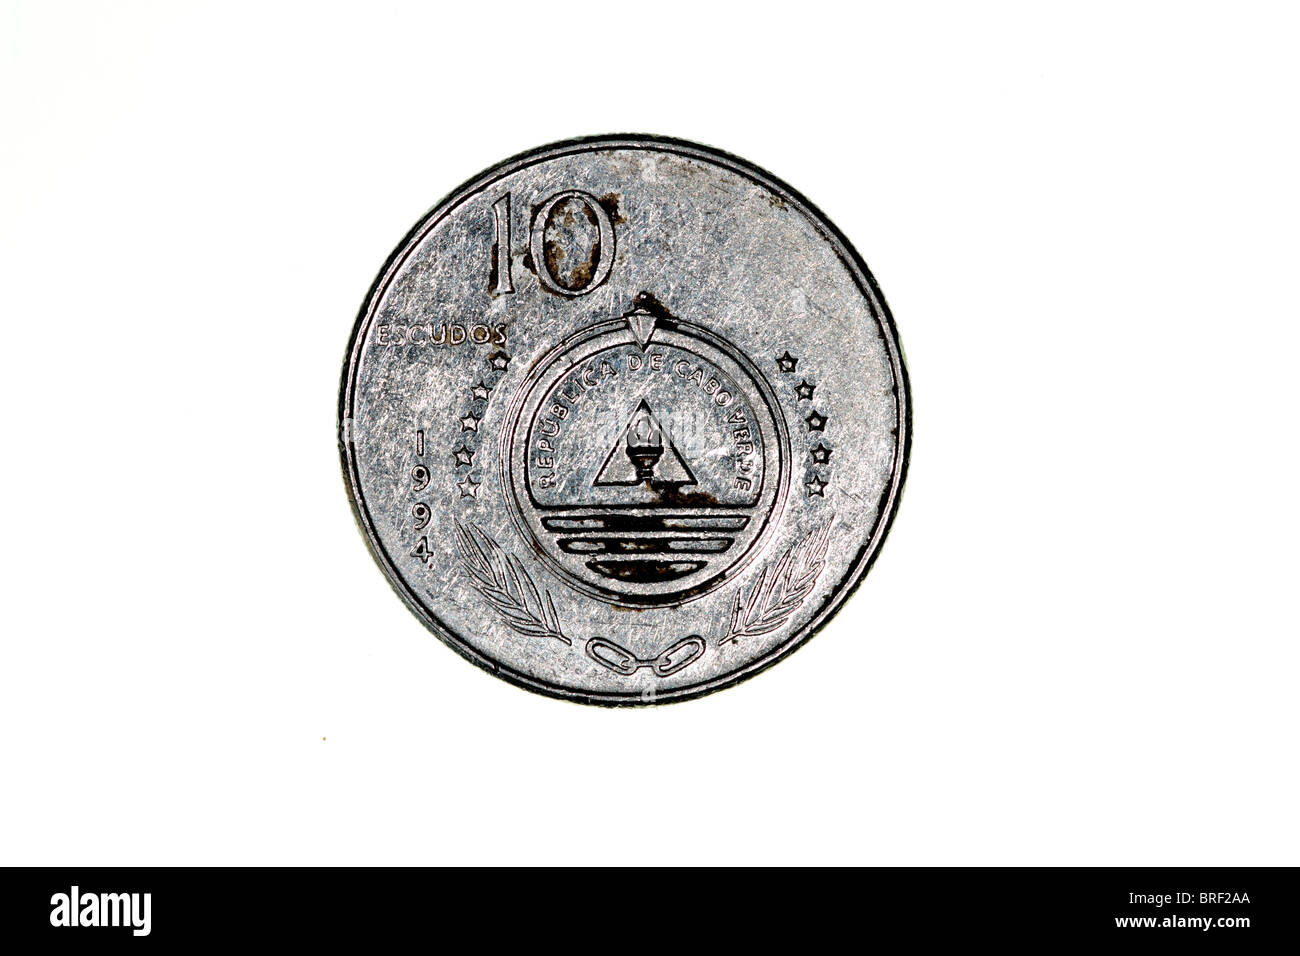 Moneta di Capo Verde Foto stock - Alamy